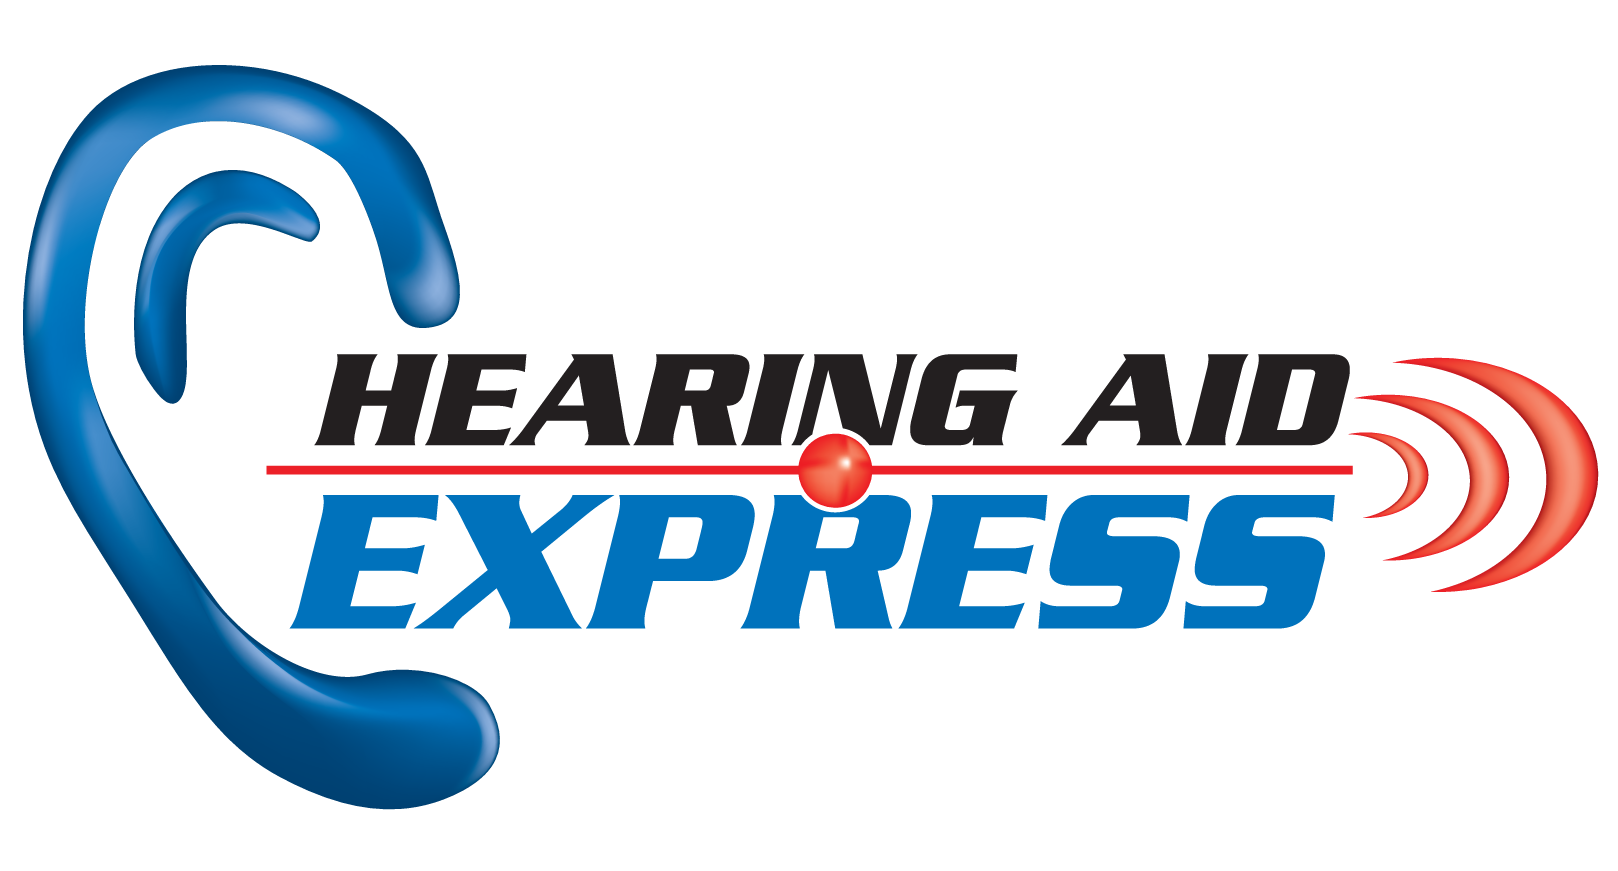 Hearing Aid Express